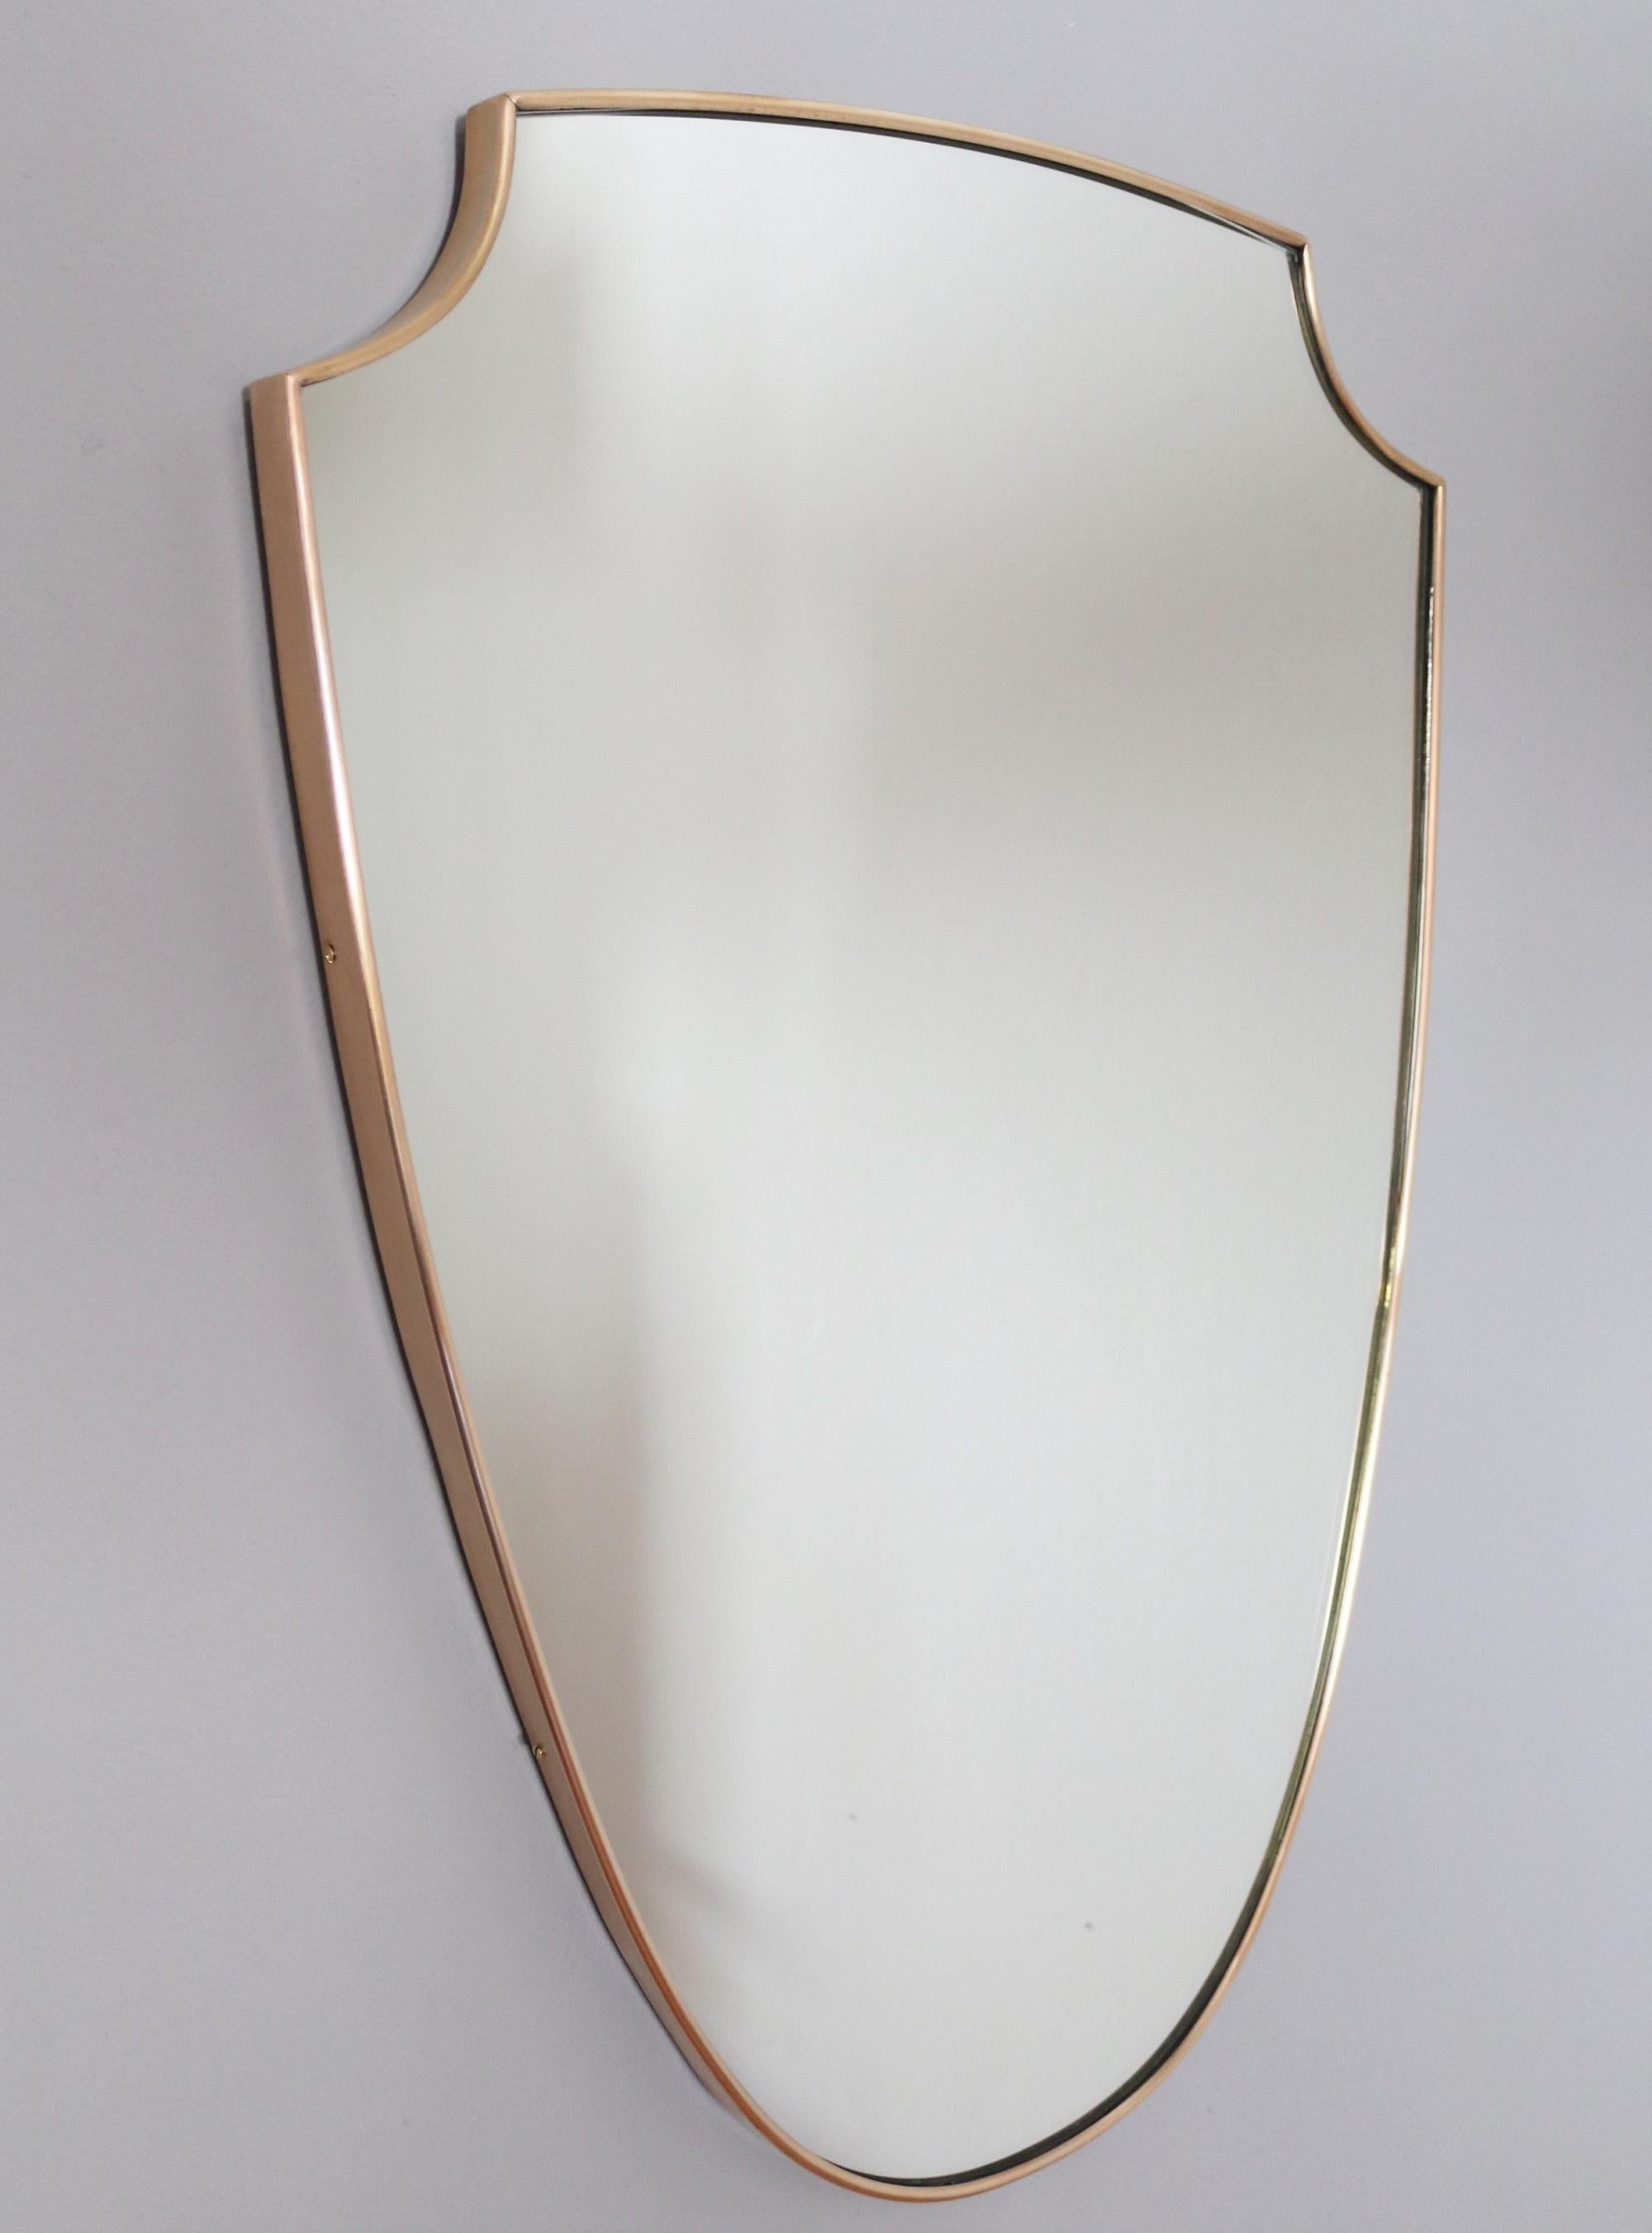 Beautiful Italian crystal glass mirror with shiny full brass frame in elegant 